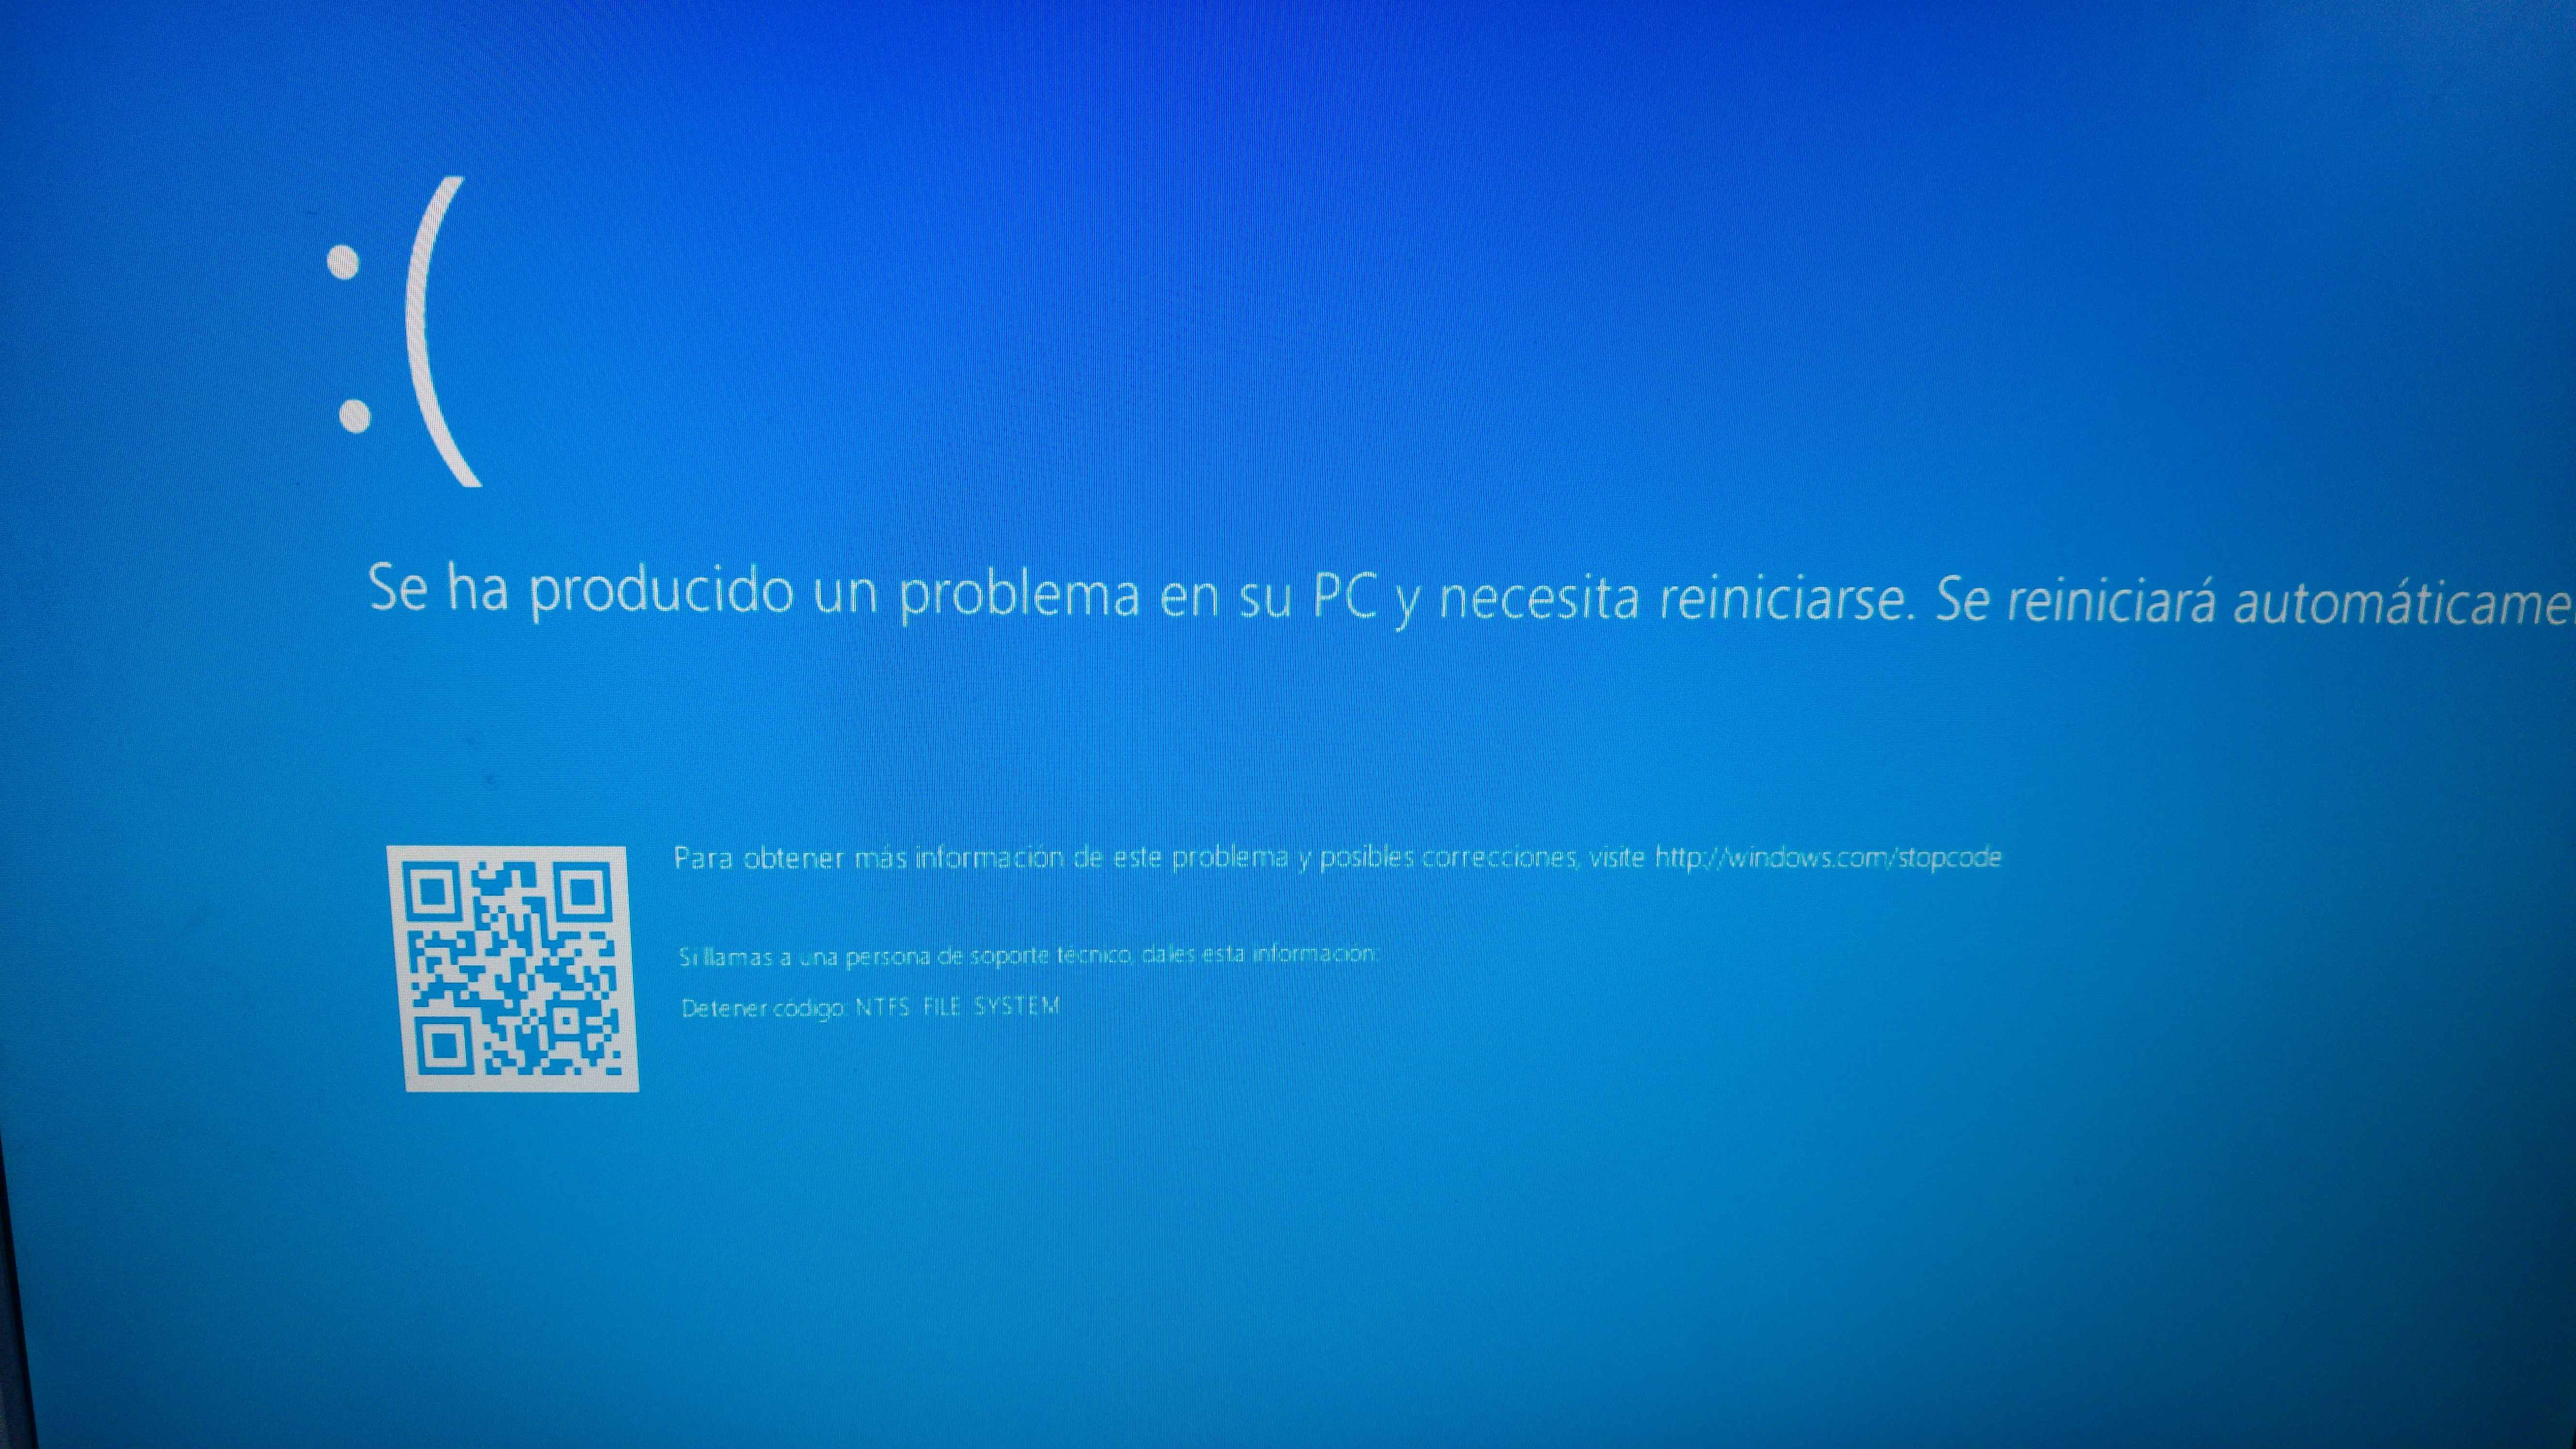 Https system error. Экран смерти Windows 10. ПК черный экран смерти Windows. Синий экран произошла ошибка. Синий экран смерти Windows.